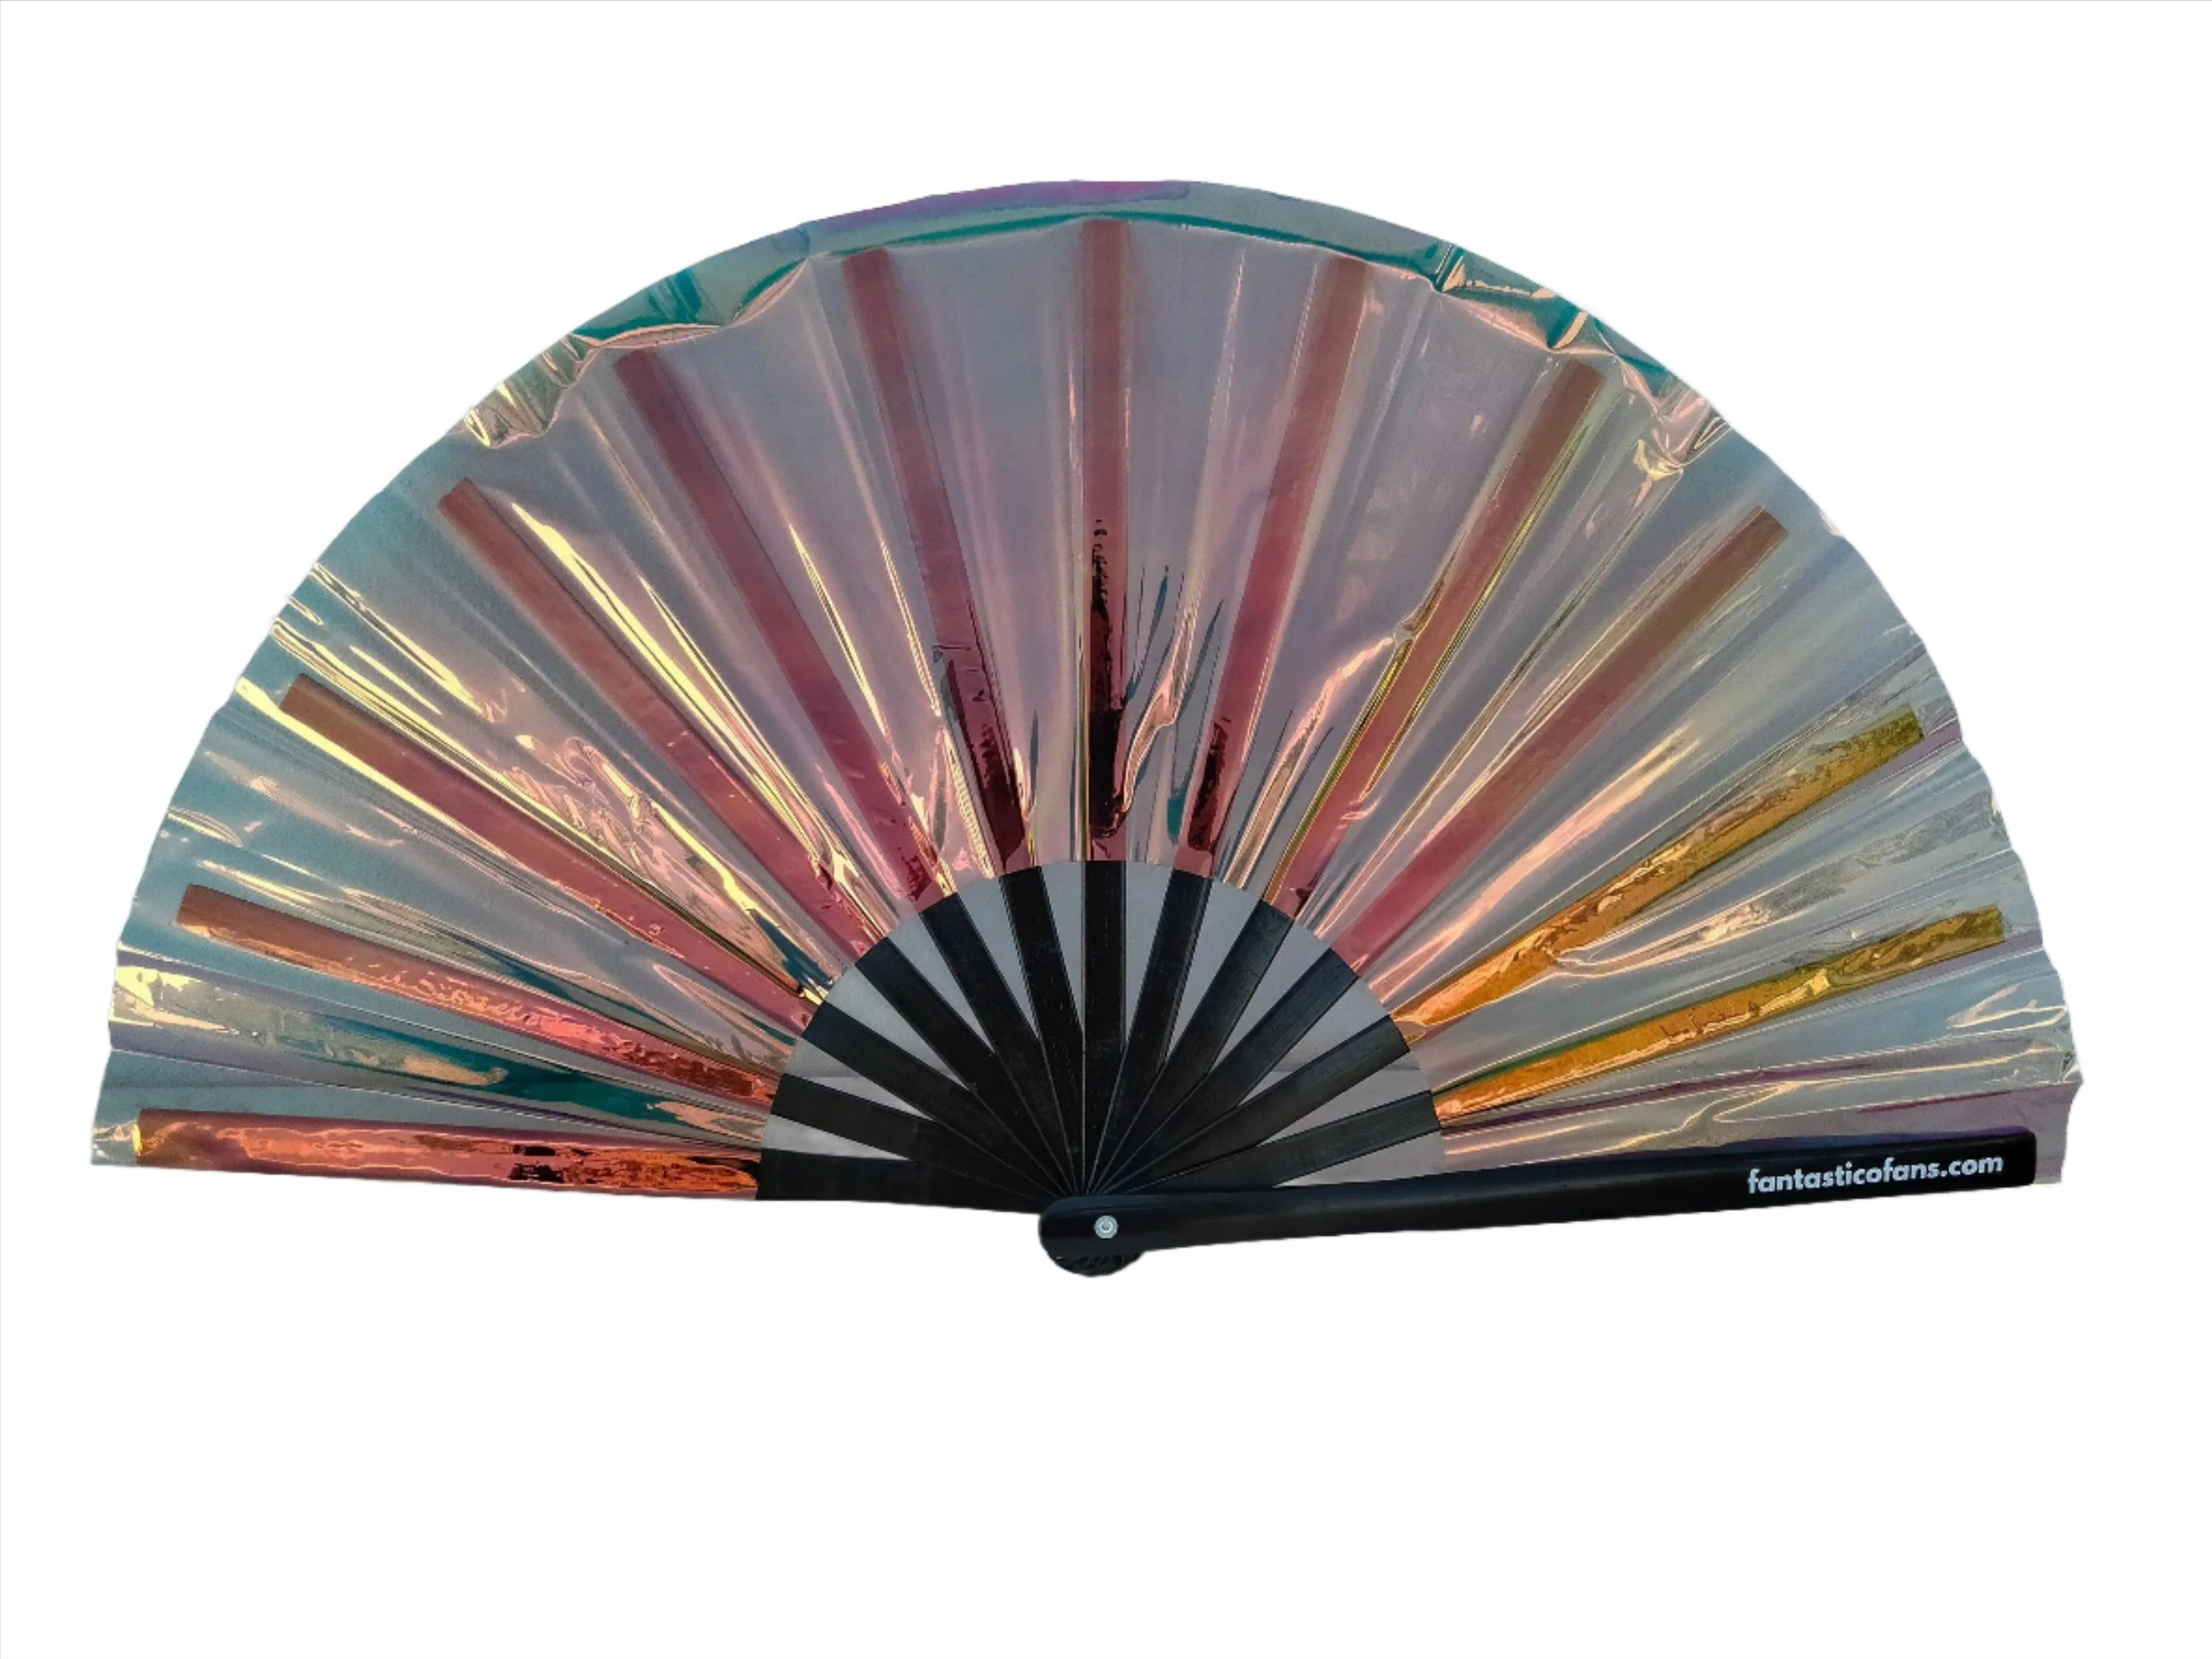 Holographic shimmer XL Fan - metallic Peacock Fantastico Fans